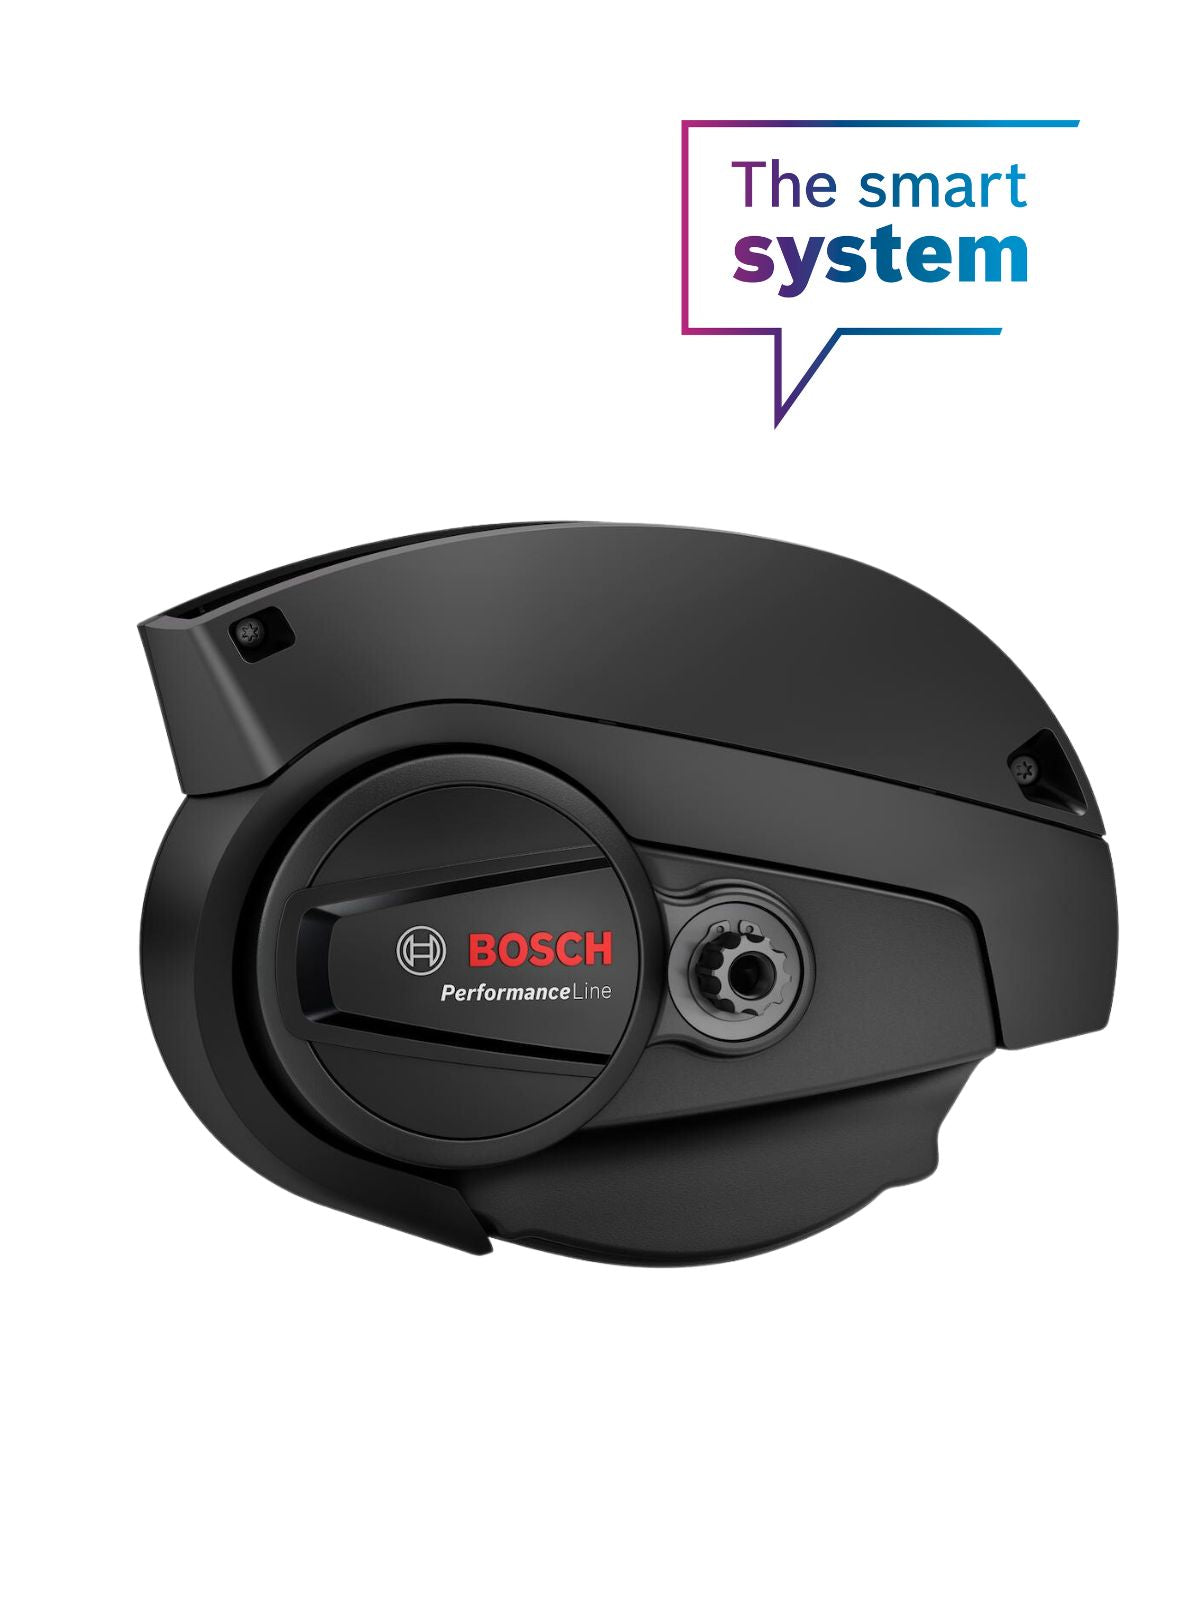 Bosch Performance Smart System